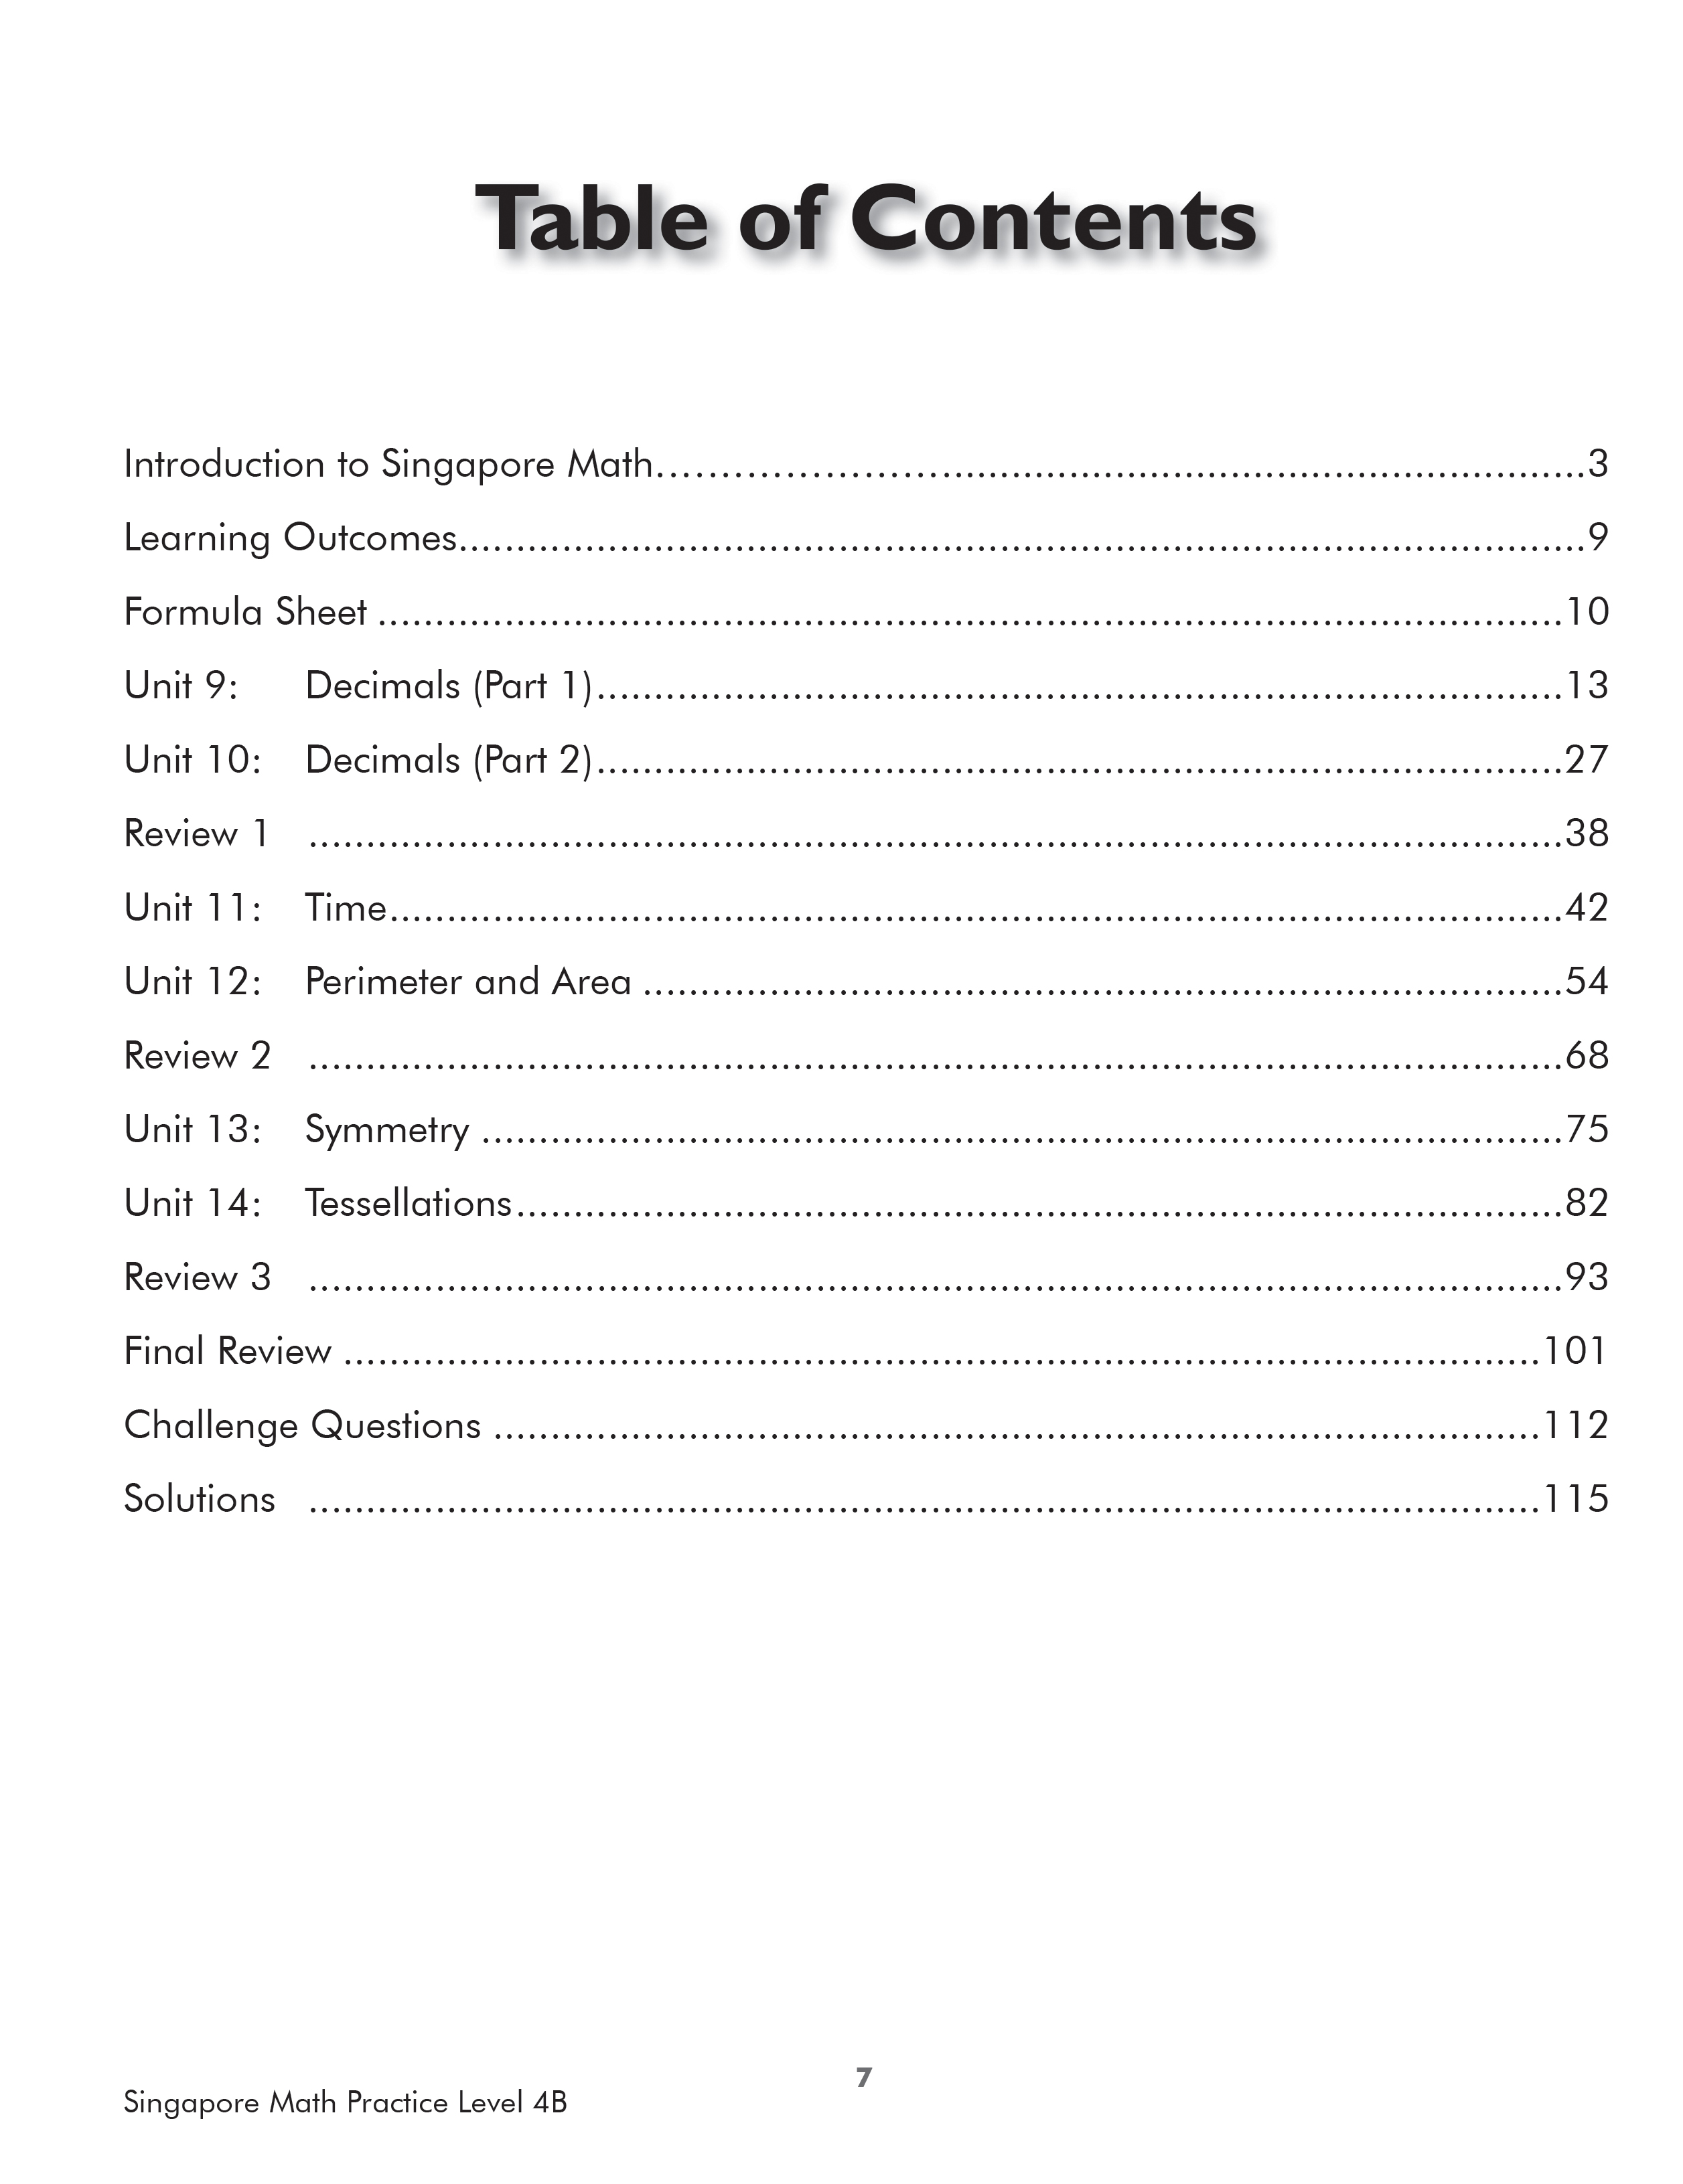 Carson Dellosa Singapore Math Level 4B Math Practice Workbook Grade 5 (128 pages) - image 4 of 5